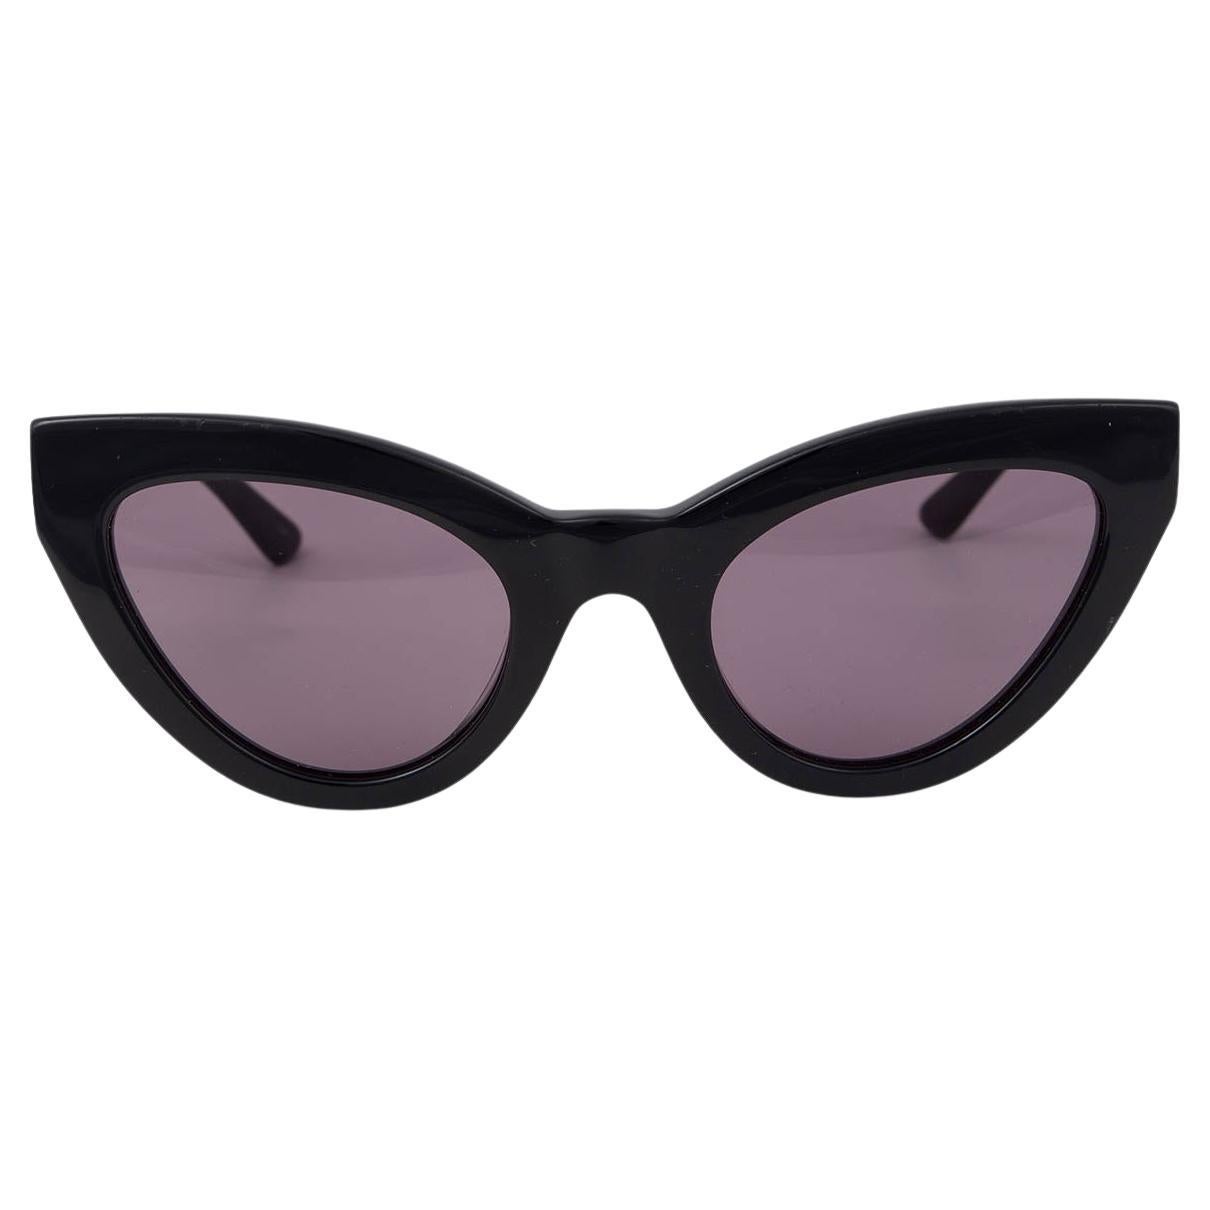 ALEXANDER MCQUEEN black CAT-EYE Sunglasses MQ152S